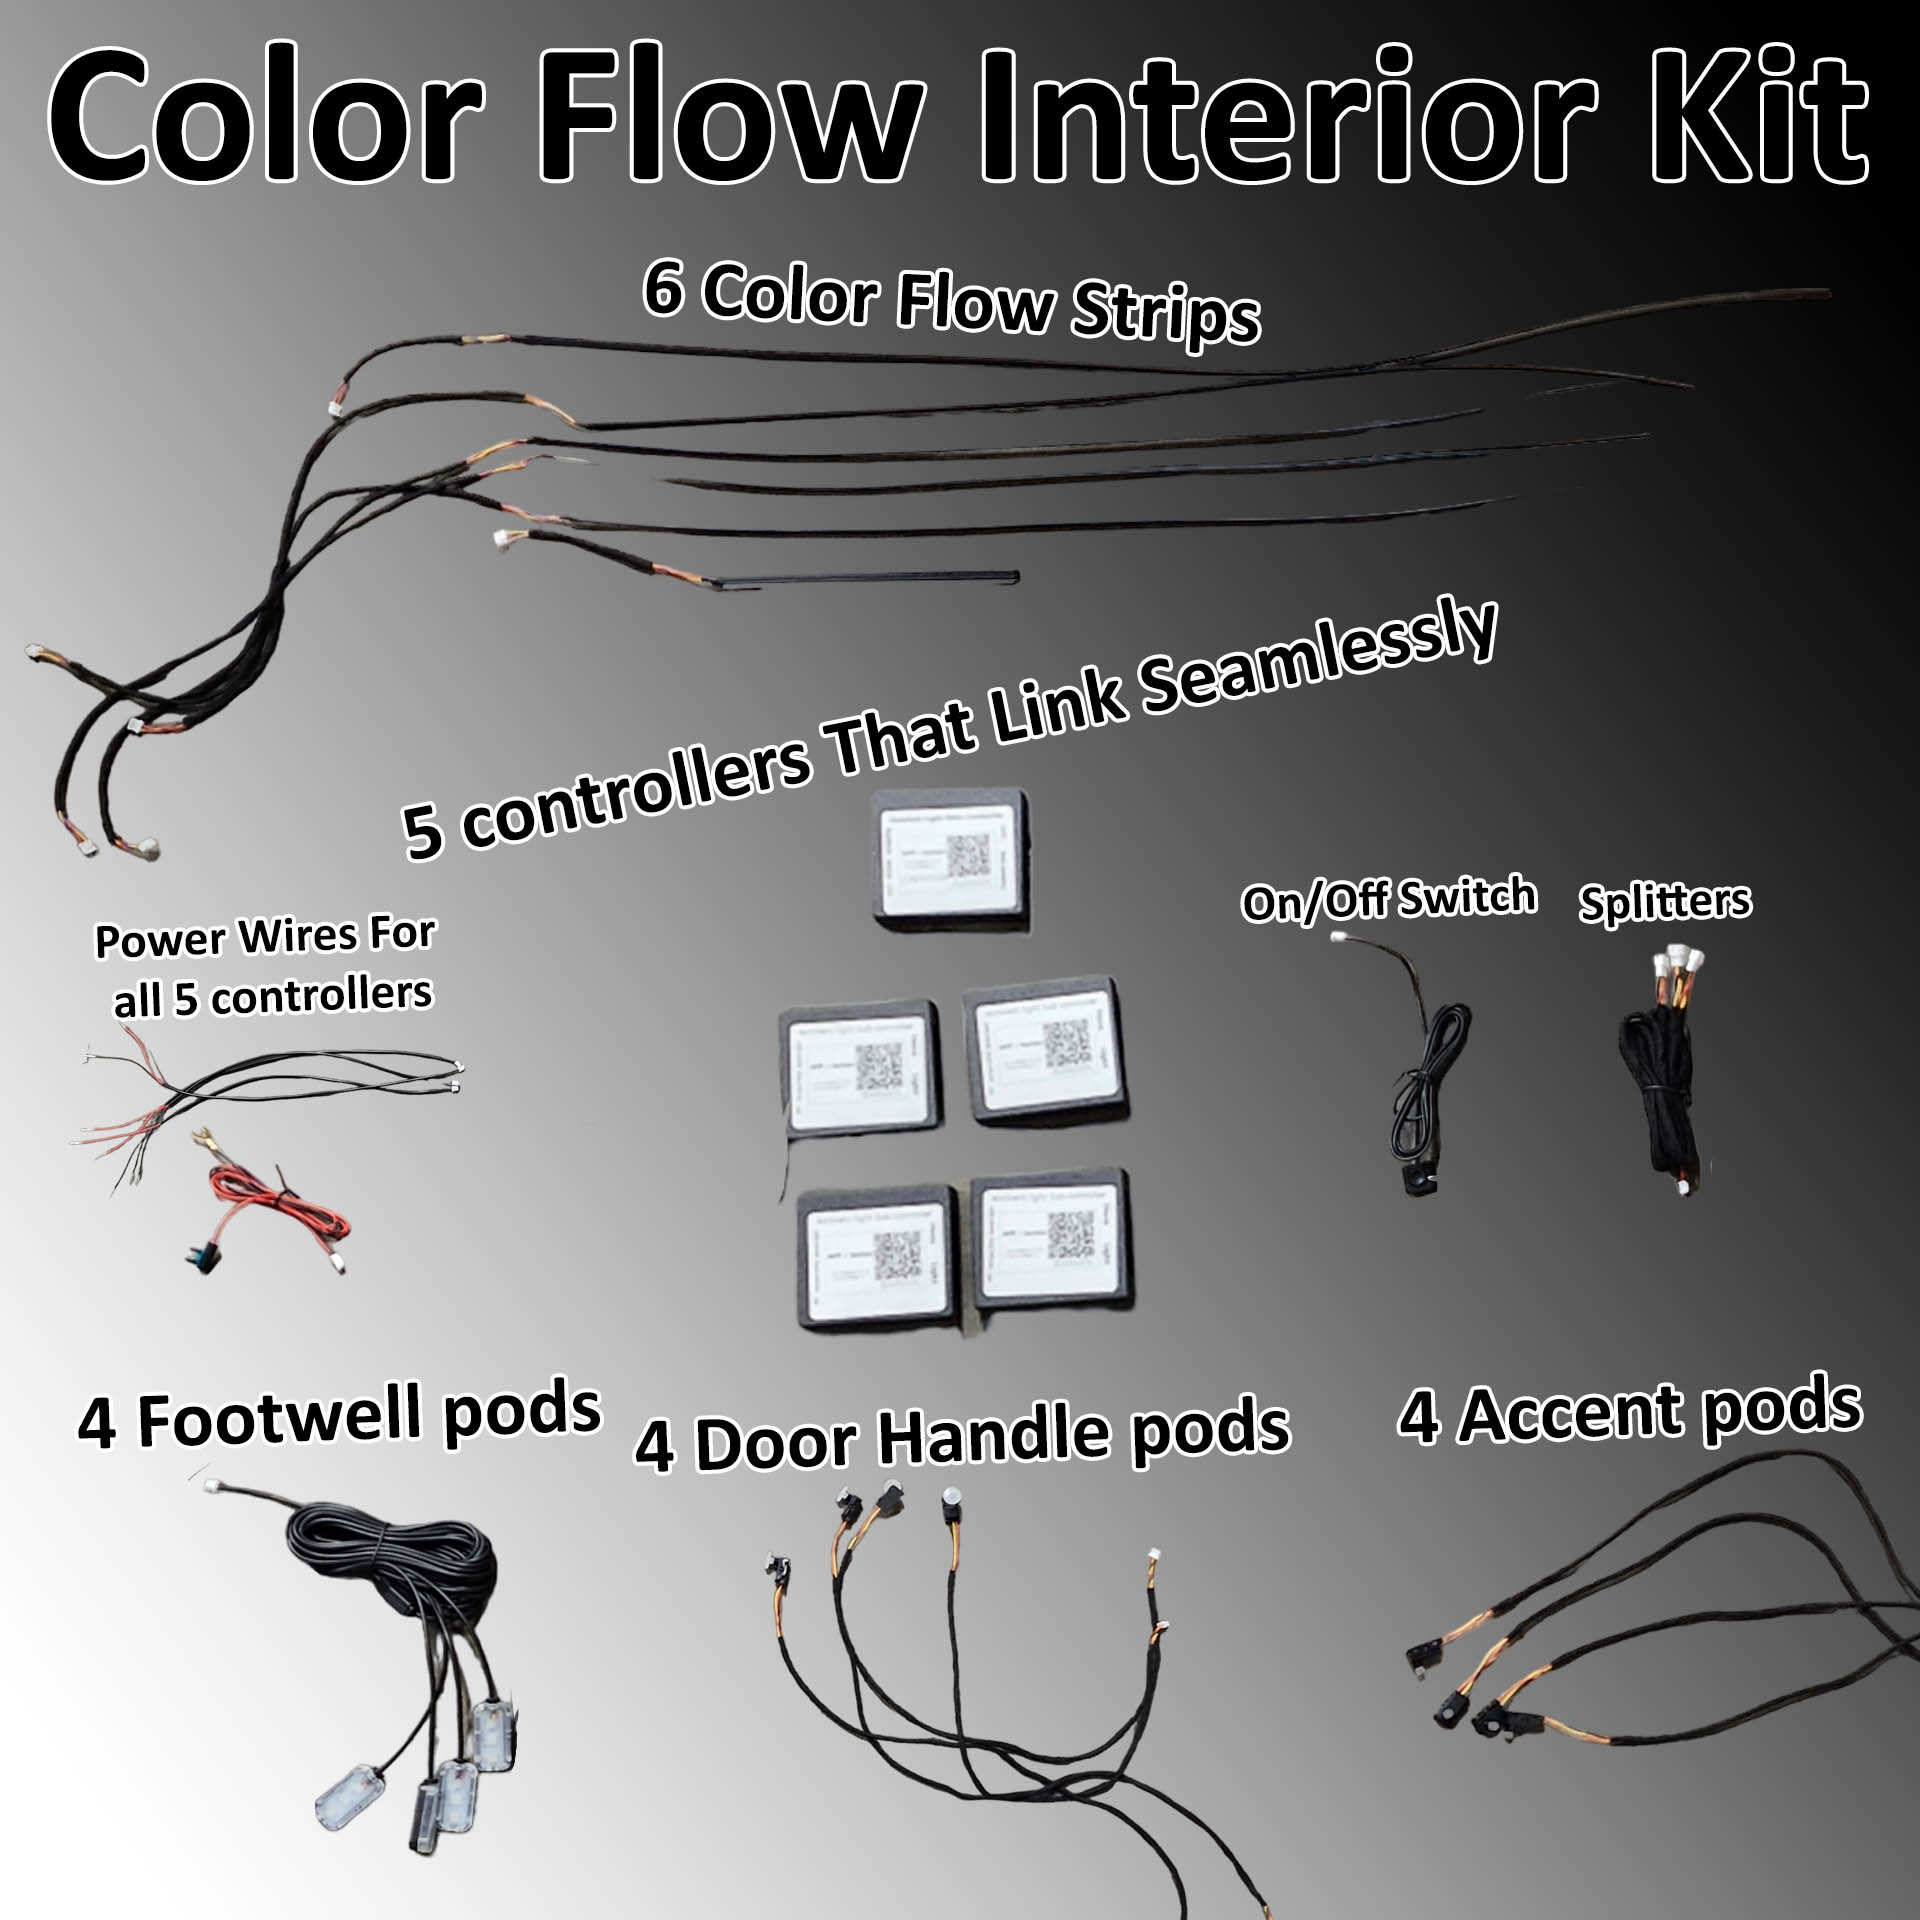 Color Flow Interior Kit